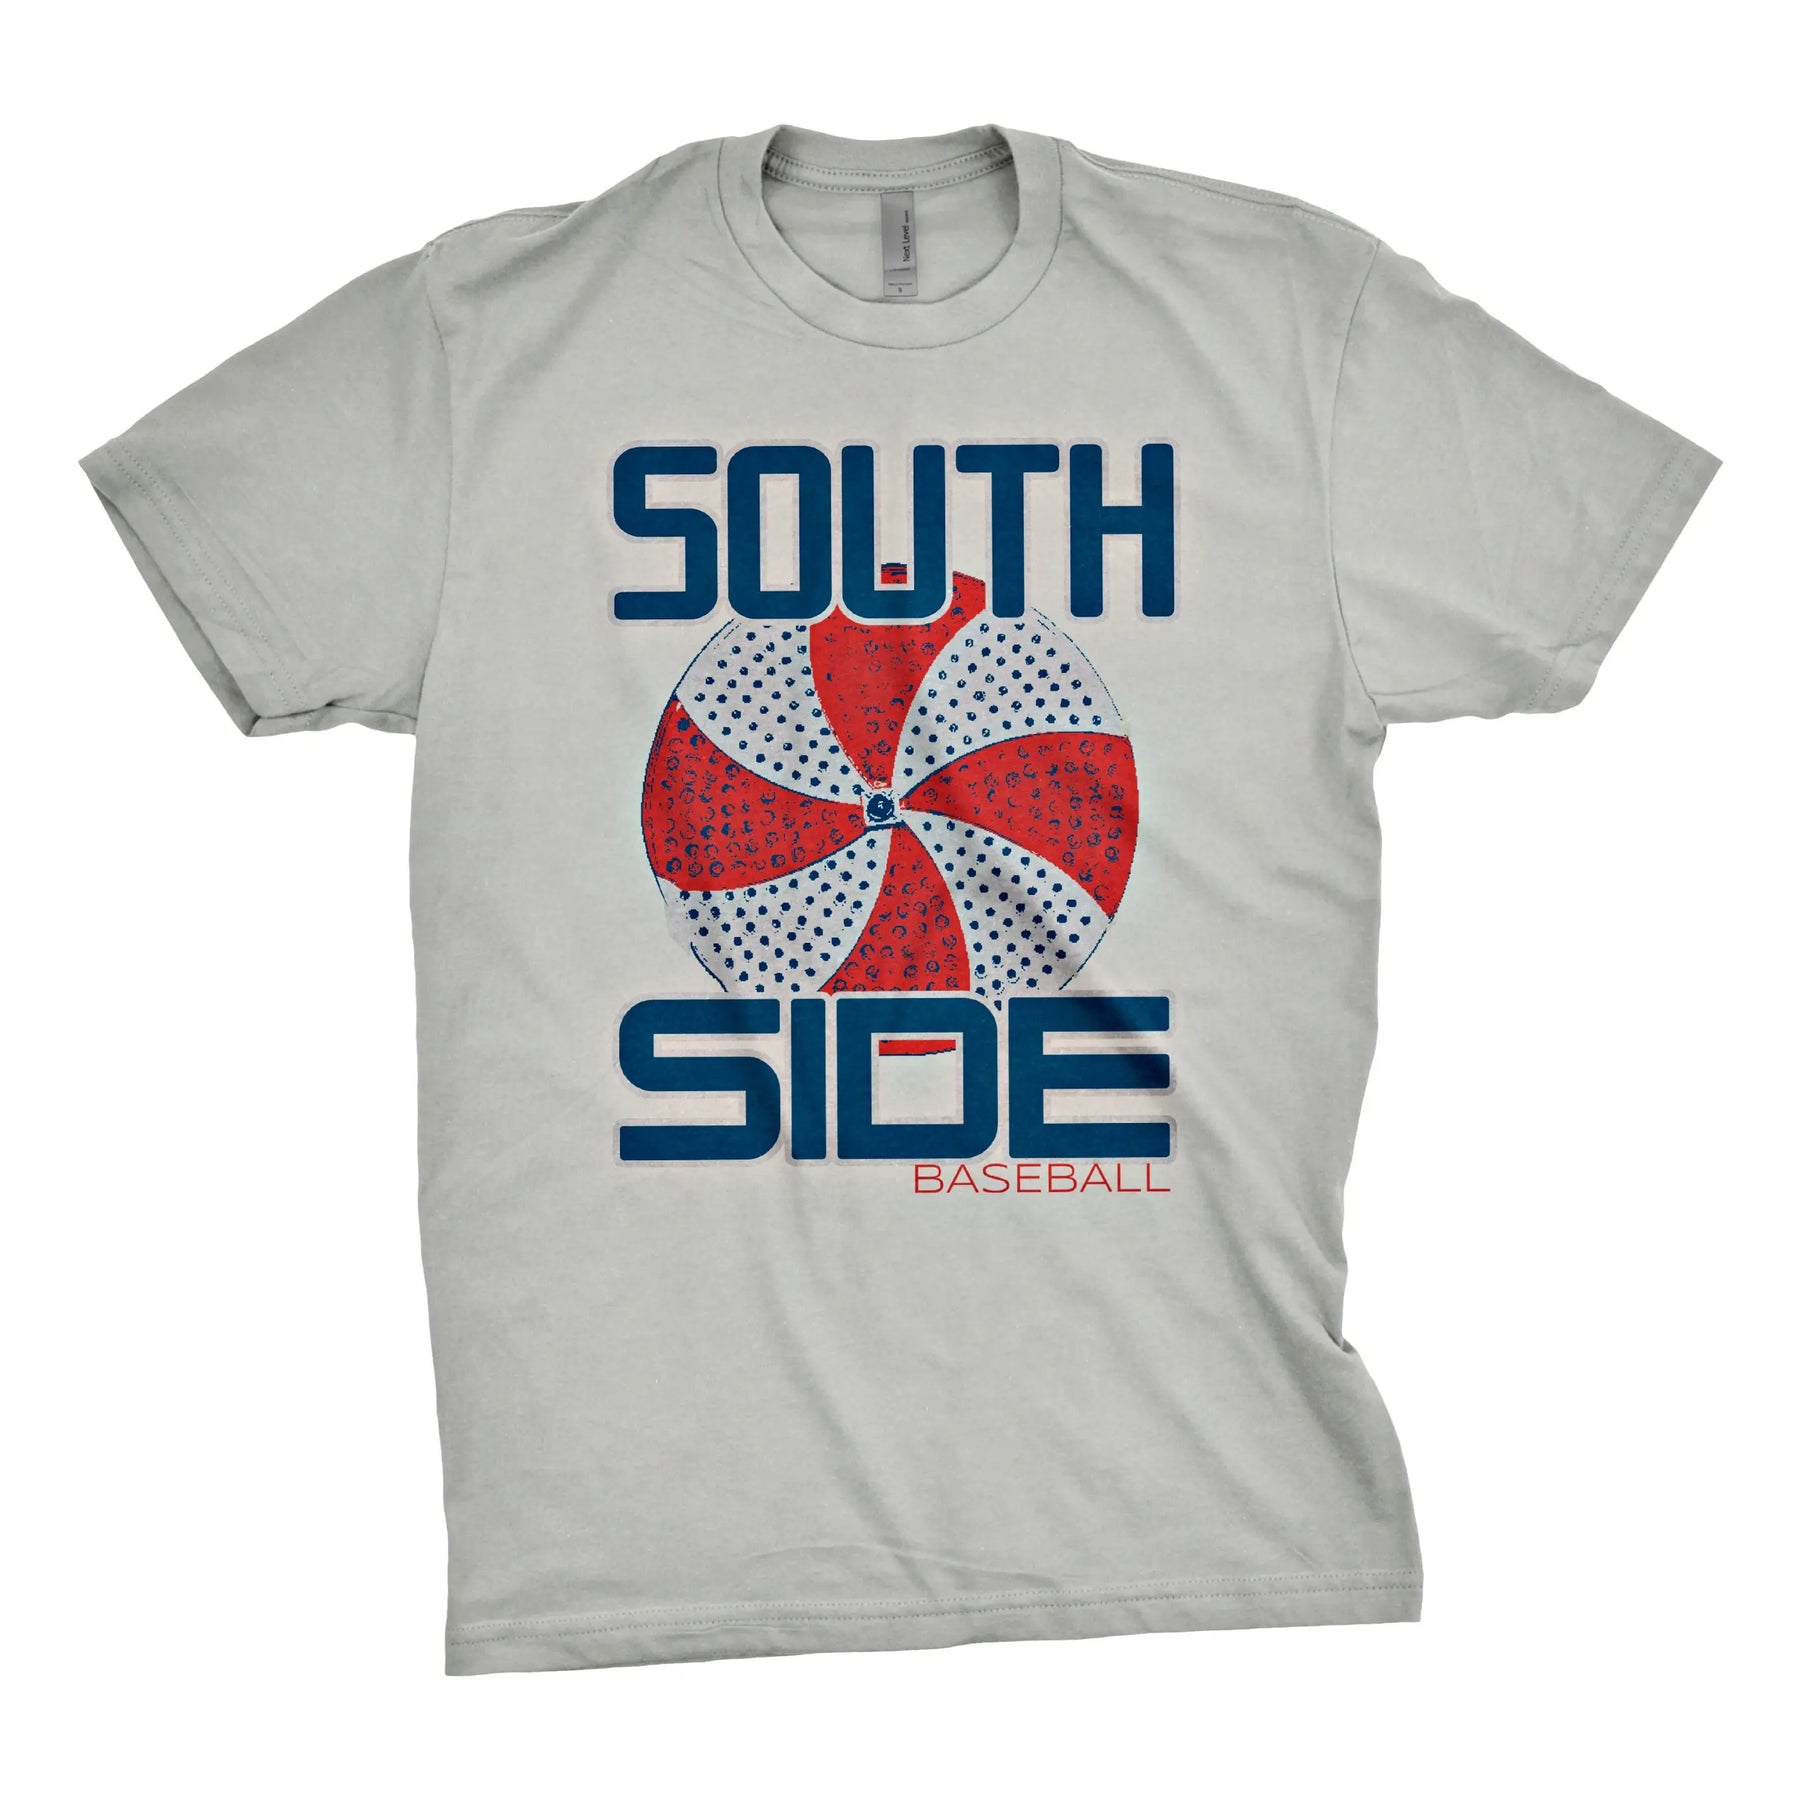 Chitown Clothing South Side Pinwheel Shirt